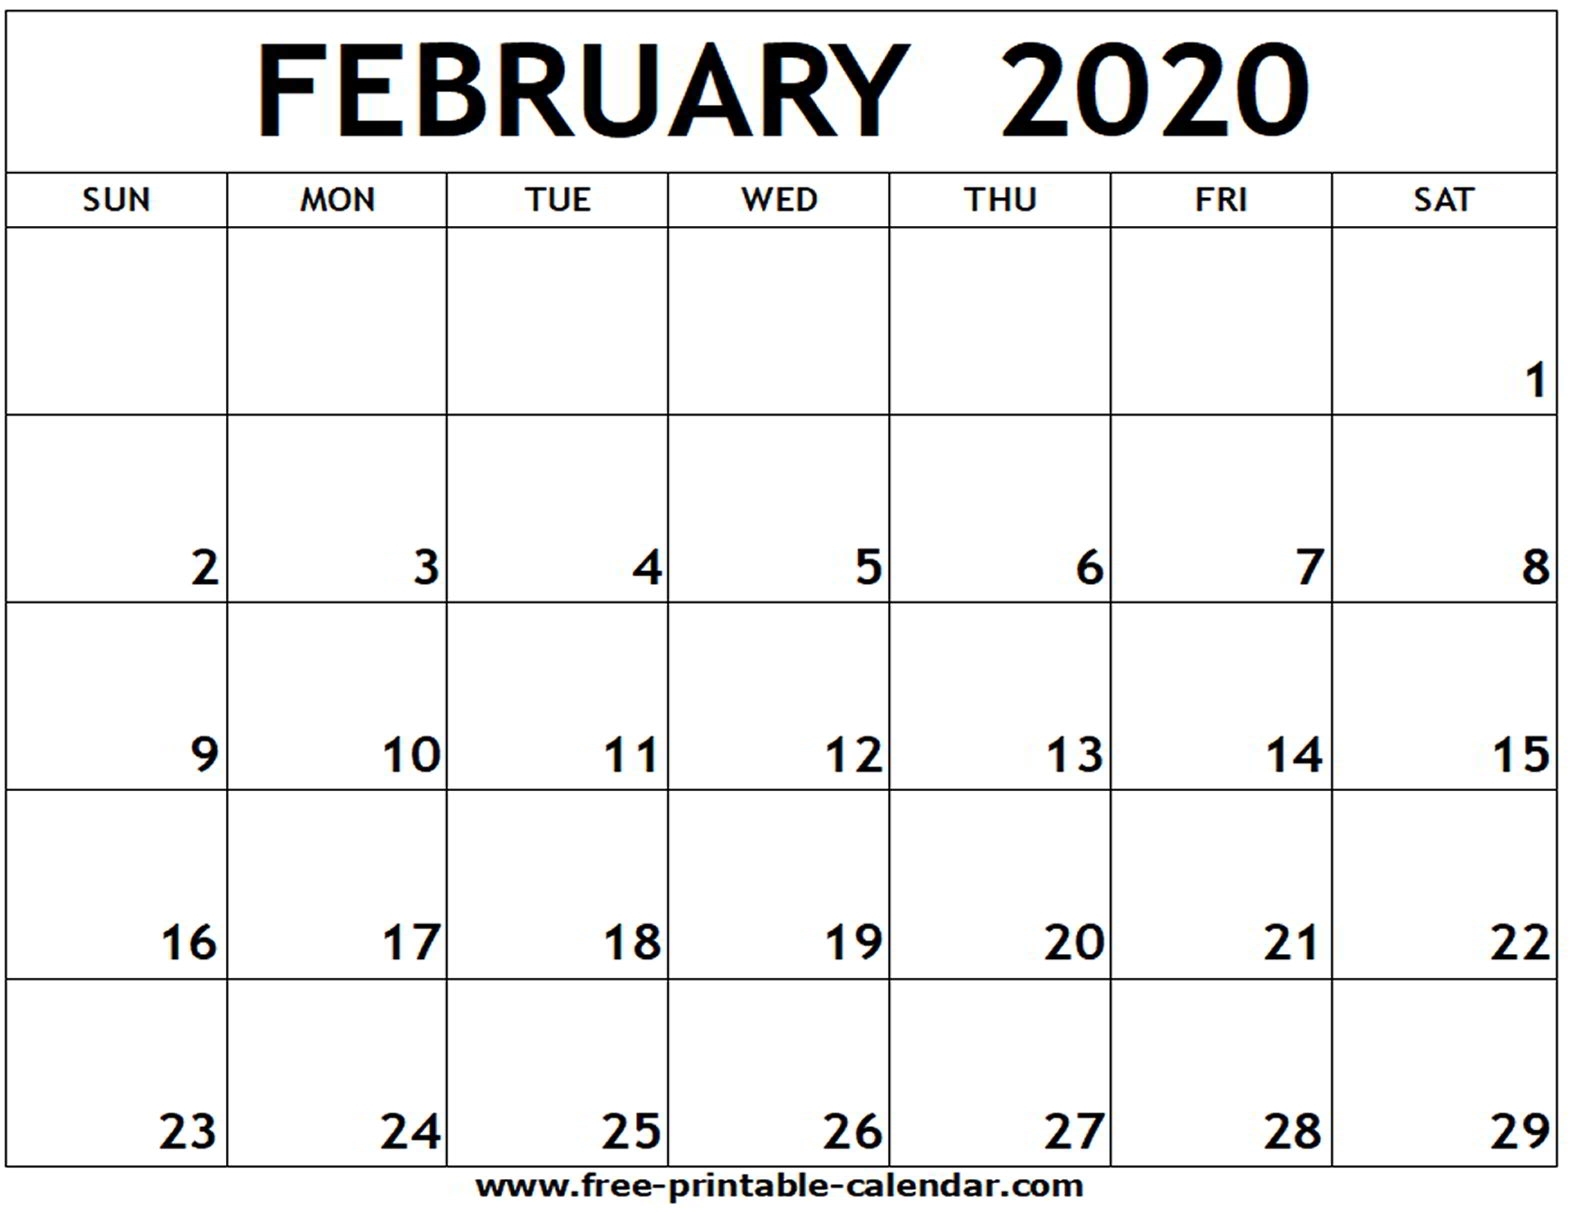 February 2020 Printable Calendar - Free-Printable-Calendar in Blank Calander 2020 Fill In